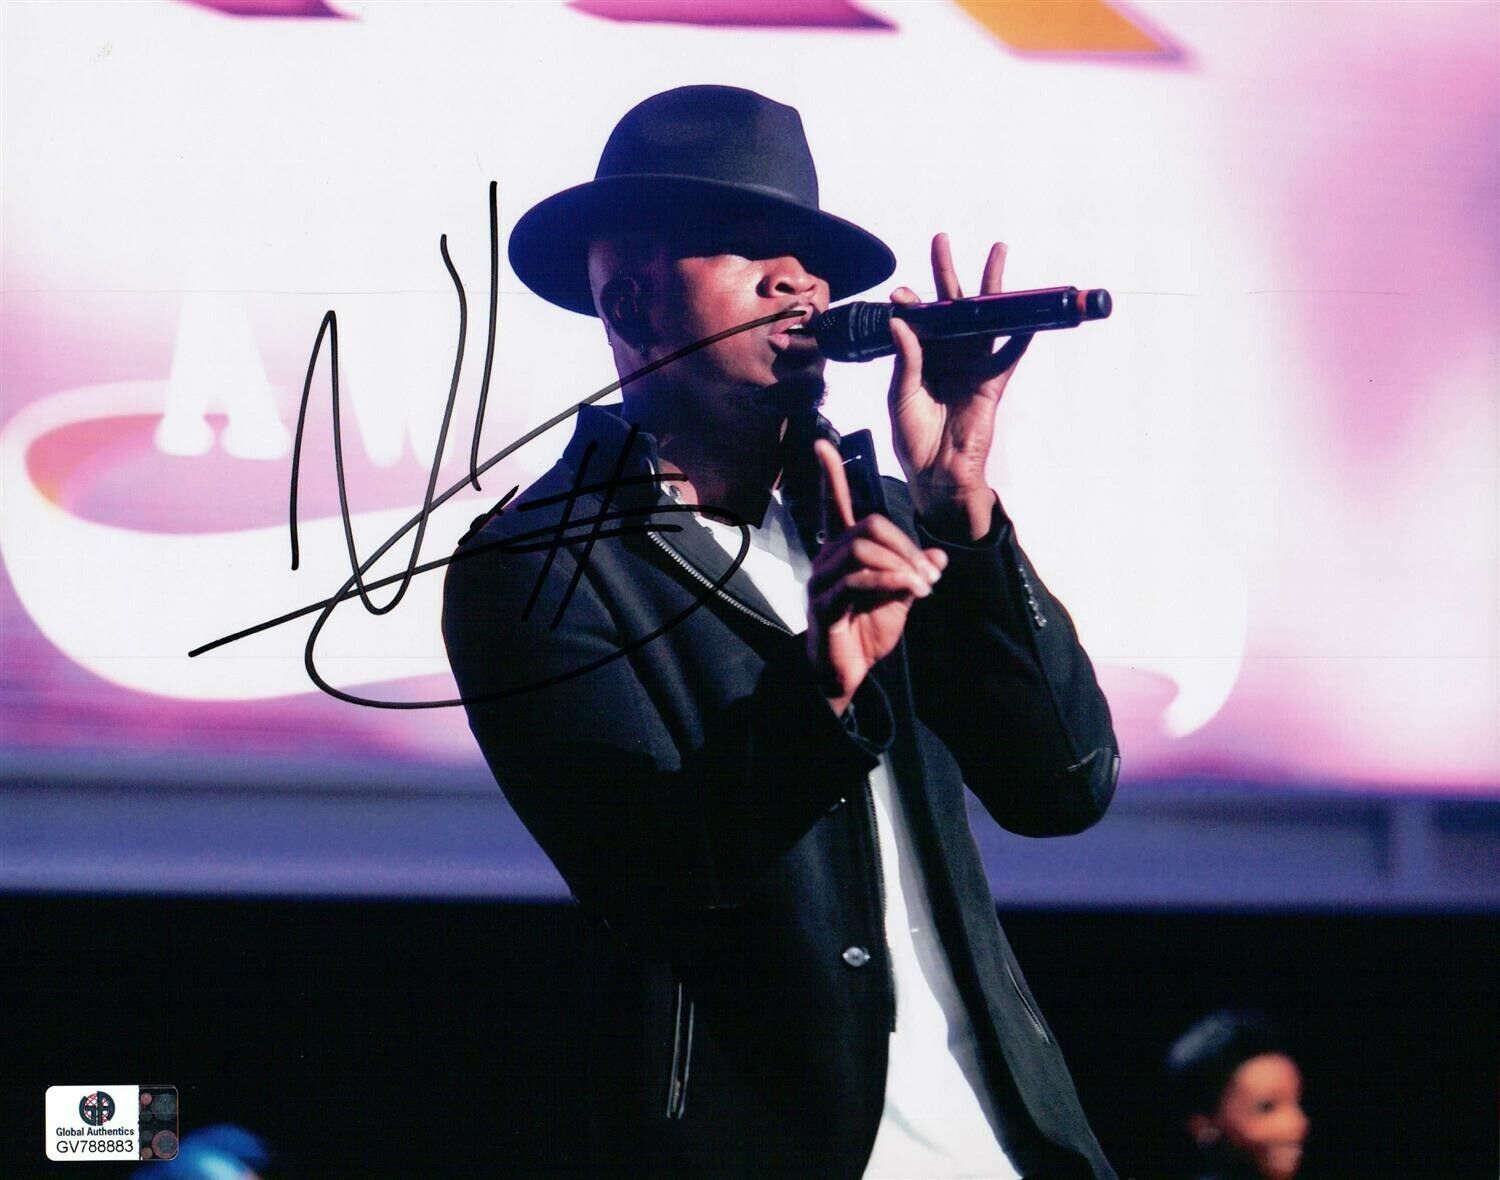 Ne-Yo Signed Autographed 8X10 Photo Poster painting Black Jacket Singing on Stage GV788883